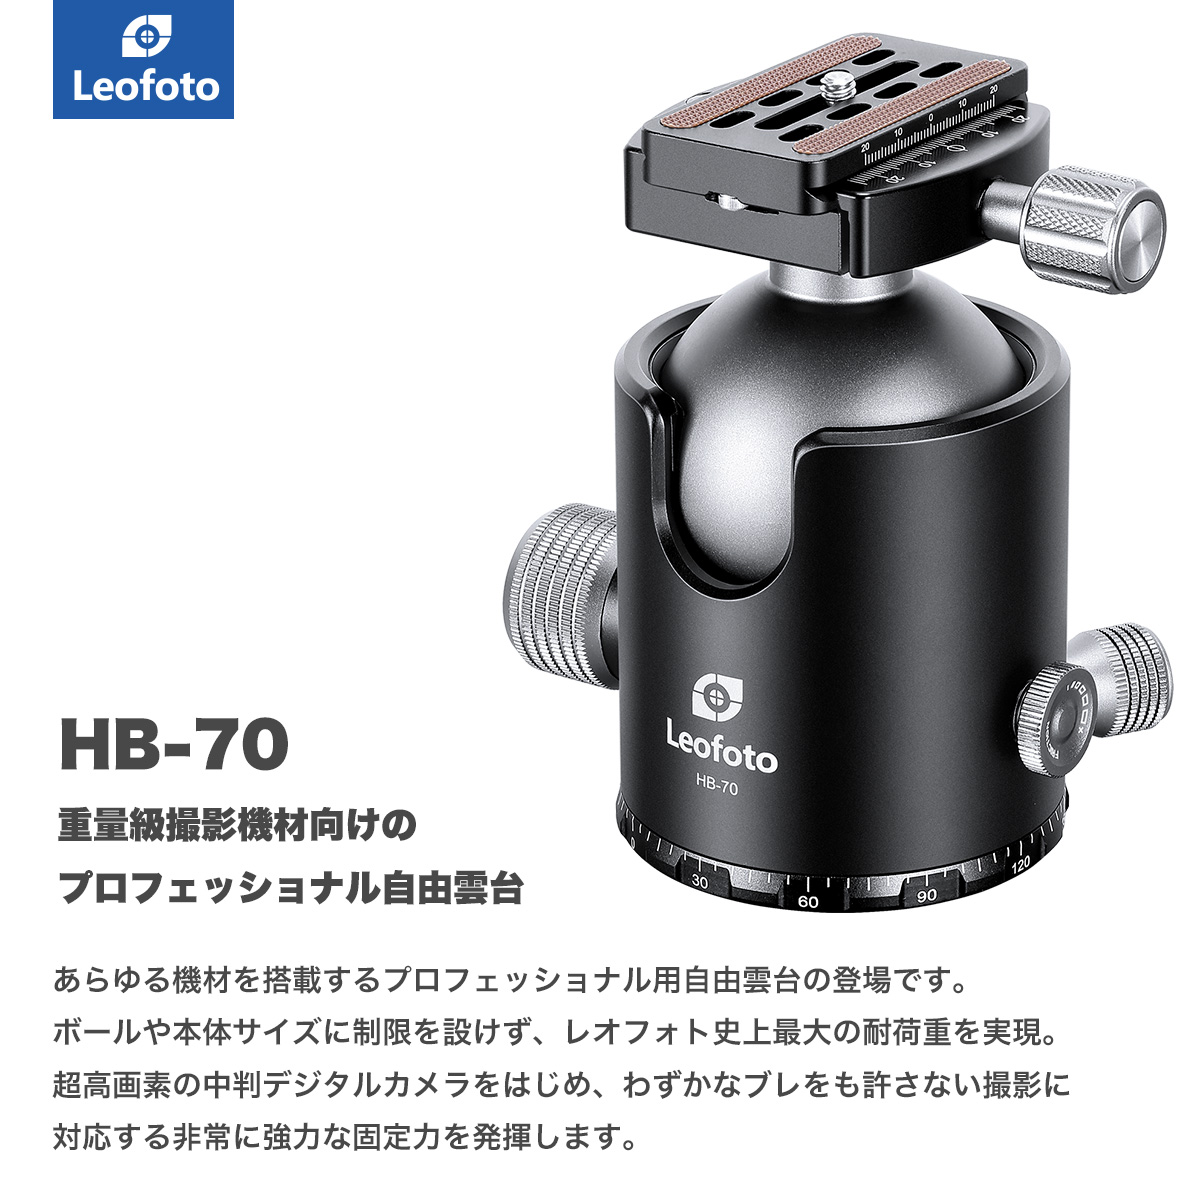 HB-70 自由雲台 Leofoto | 株式会社ワイドトレード